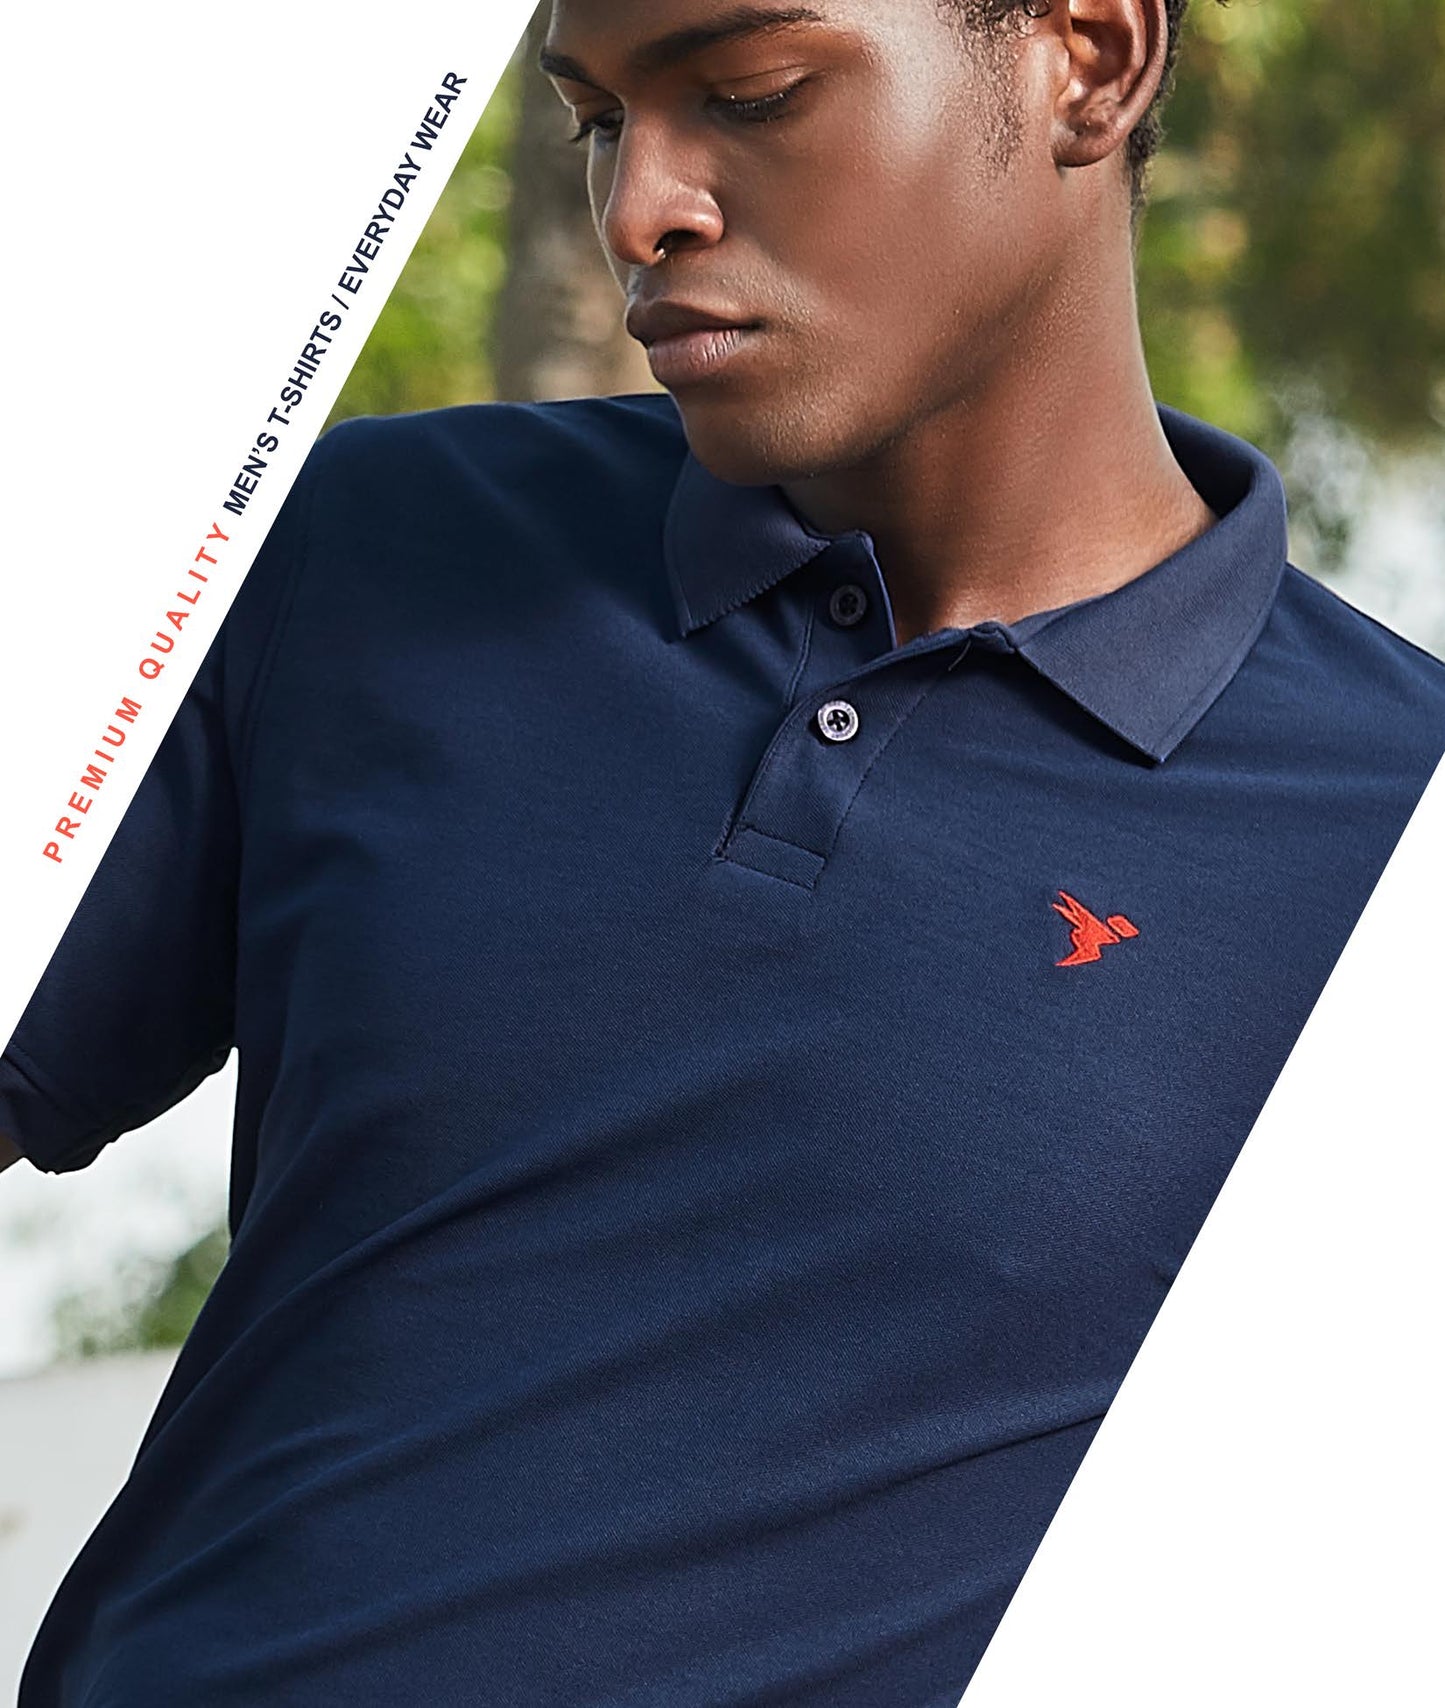 TechnoSport Polo Neck Half Sleeve Dry Fit T Shirt for Men OR-11 (Navy Blue)